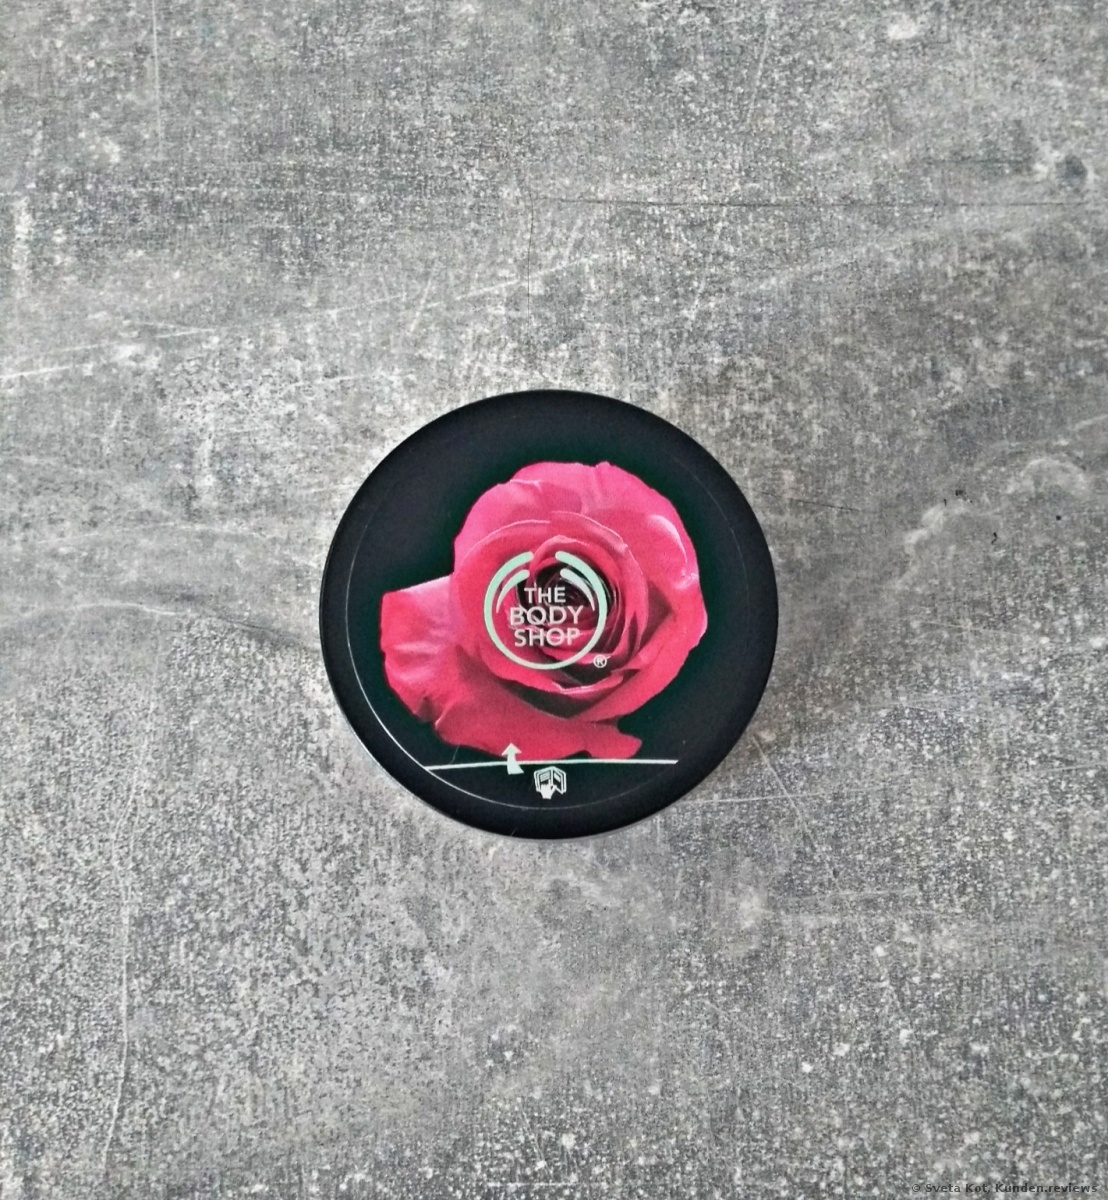 The Body Shop “British Rose” Body Scrub